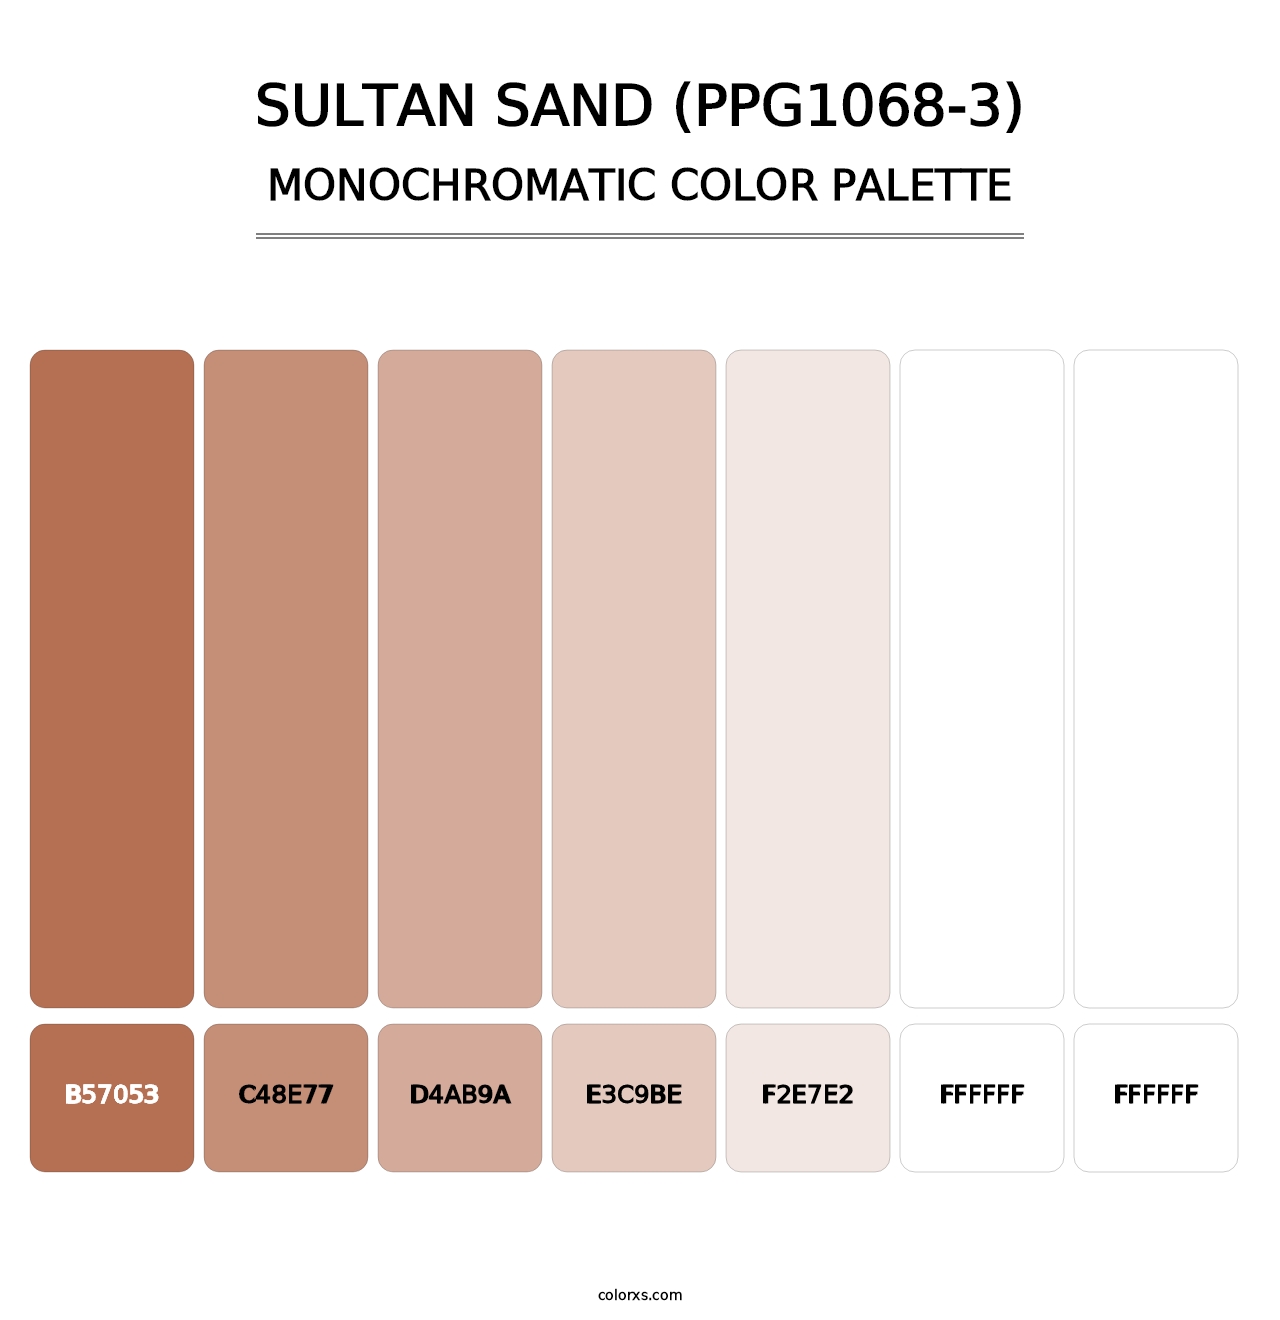 Sultan Sand (PPG1068-3) - Monochromatic Color Palette